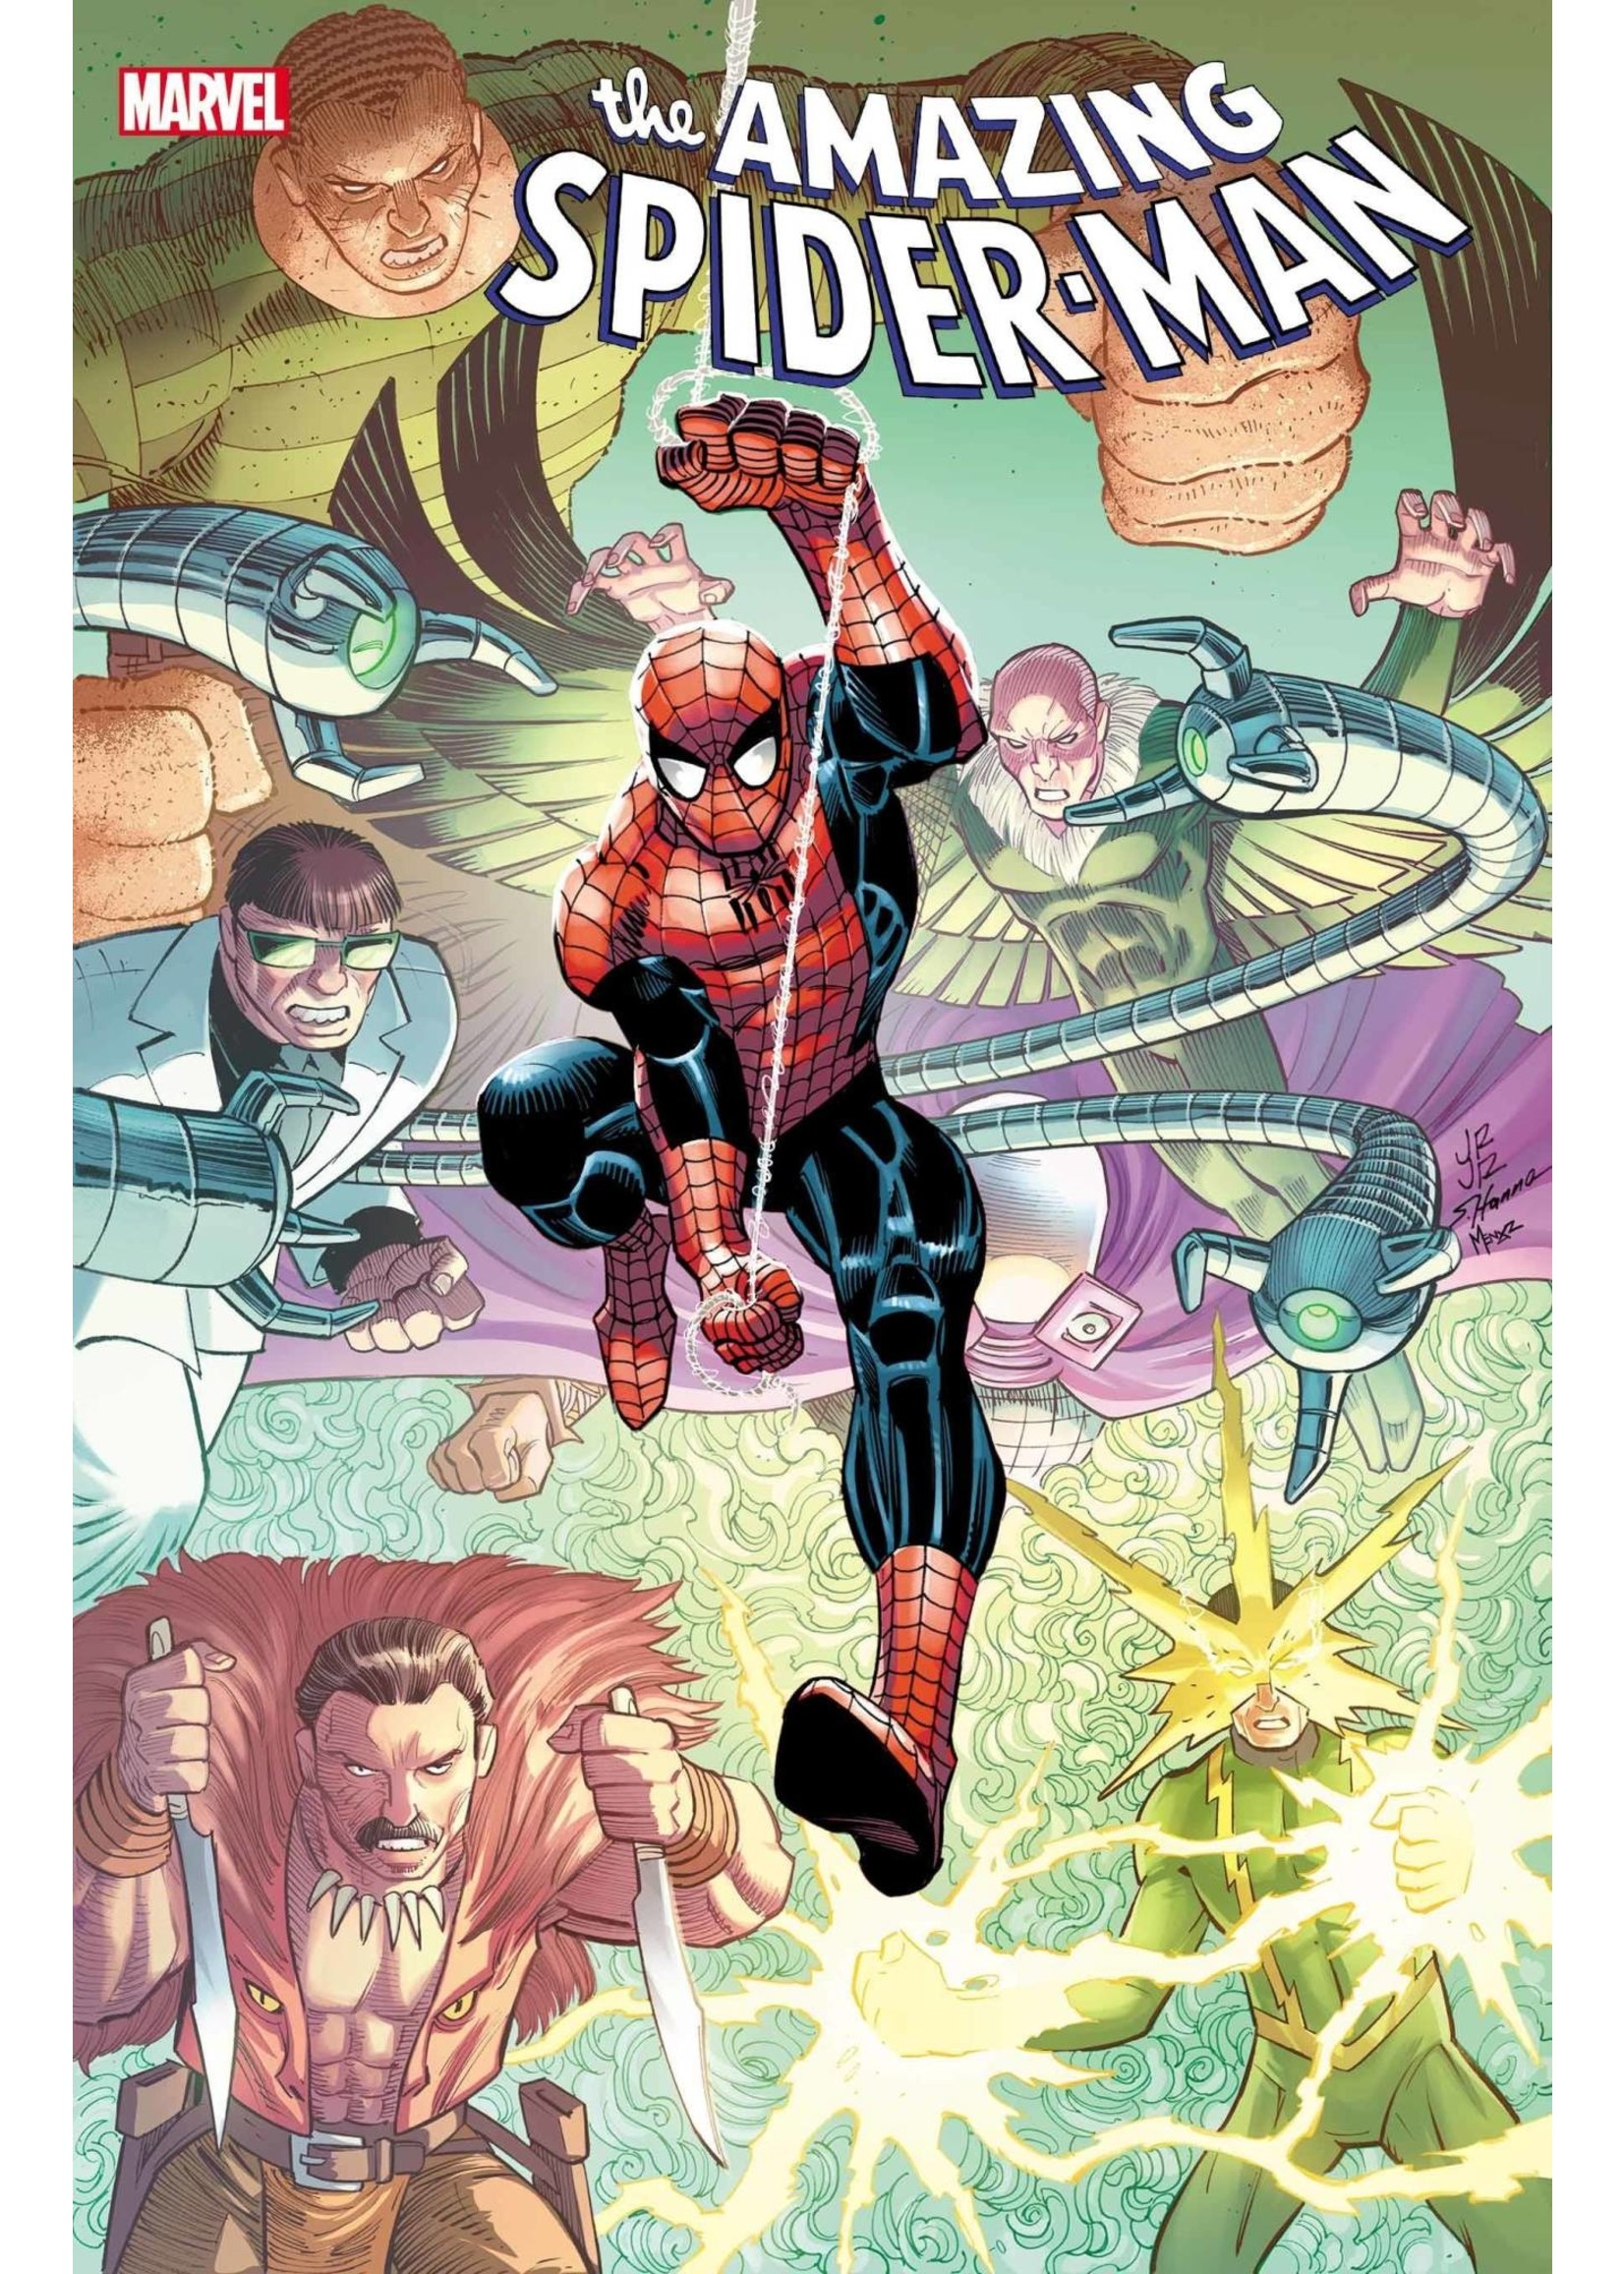 MARVEL COMICS AMAZING SPIDER-MAN #6